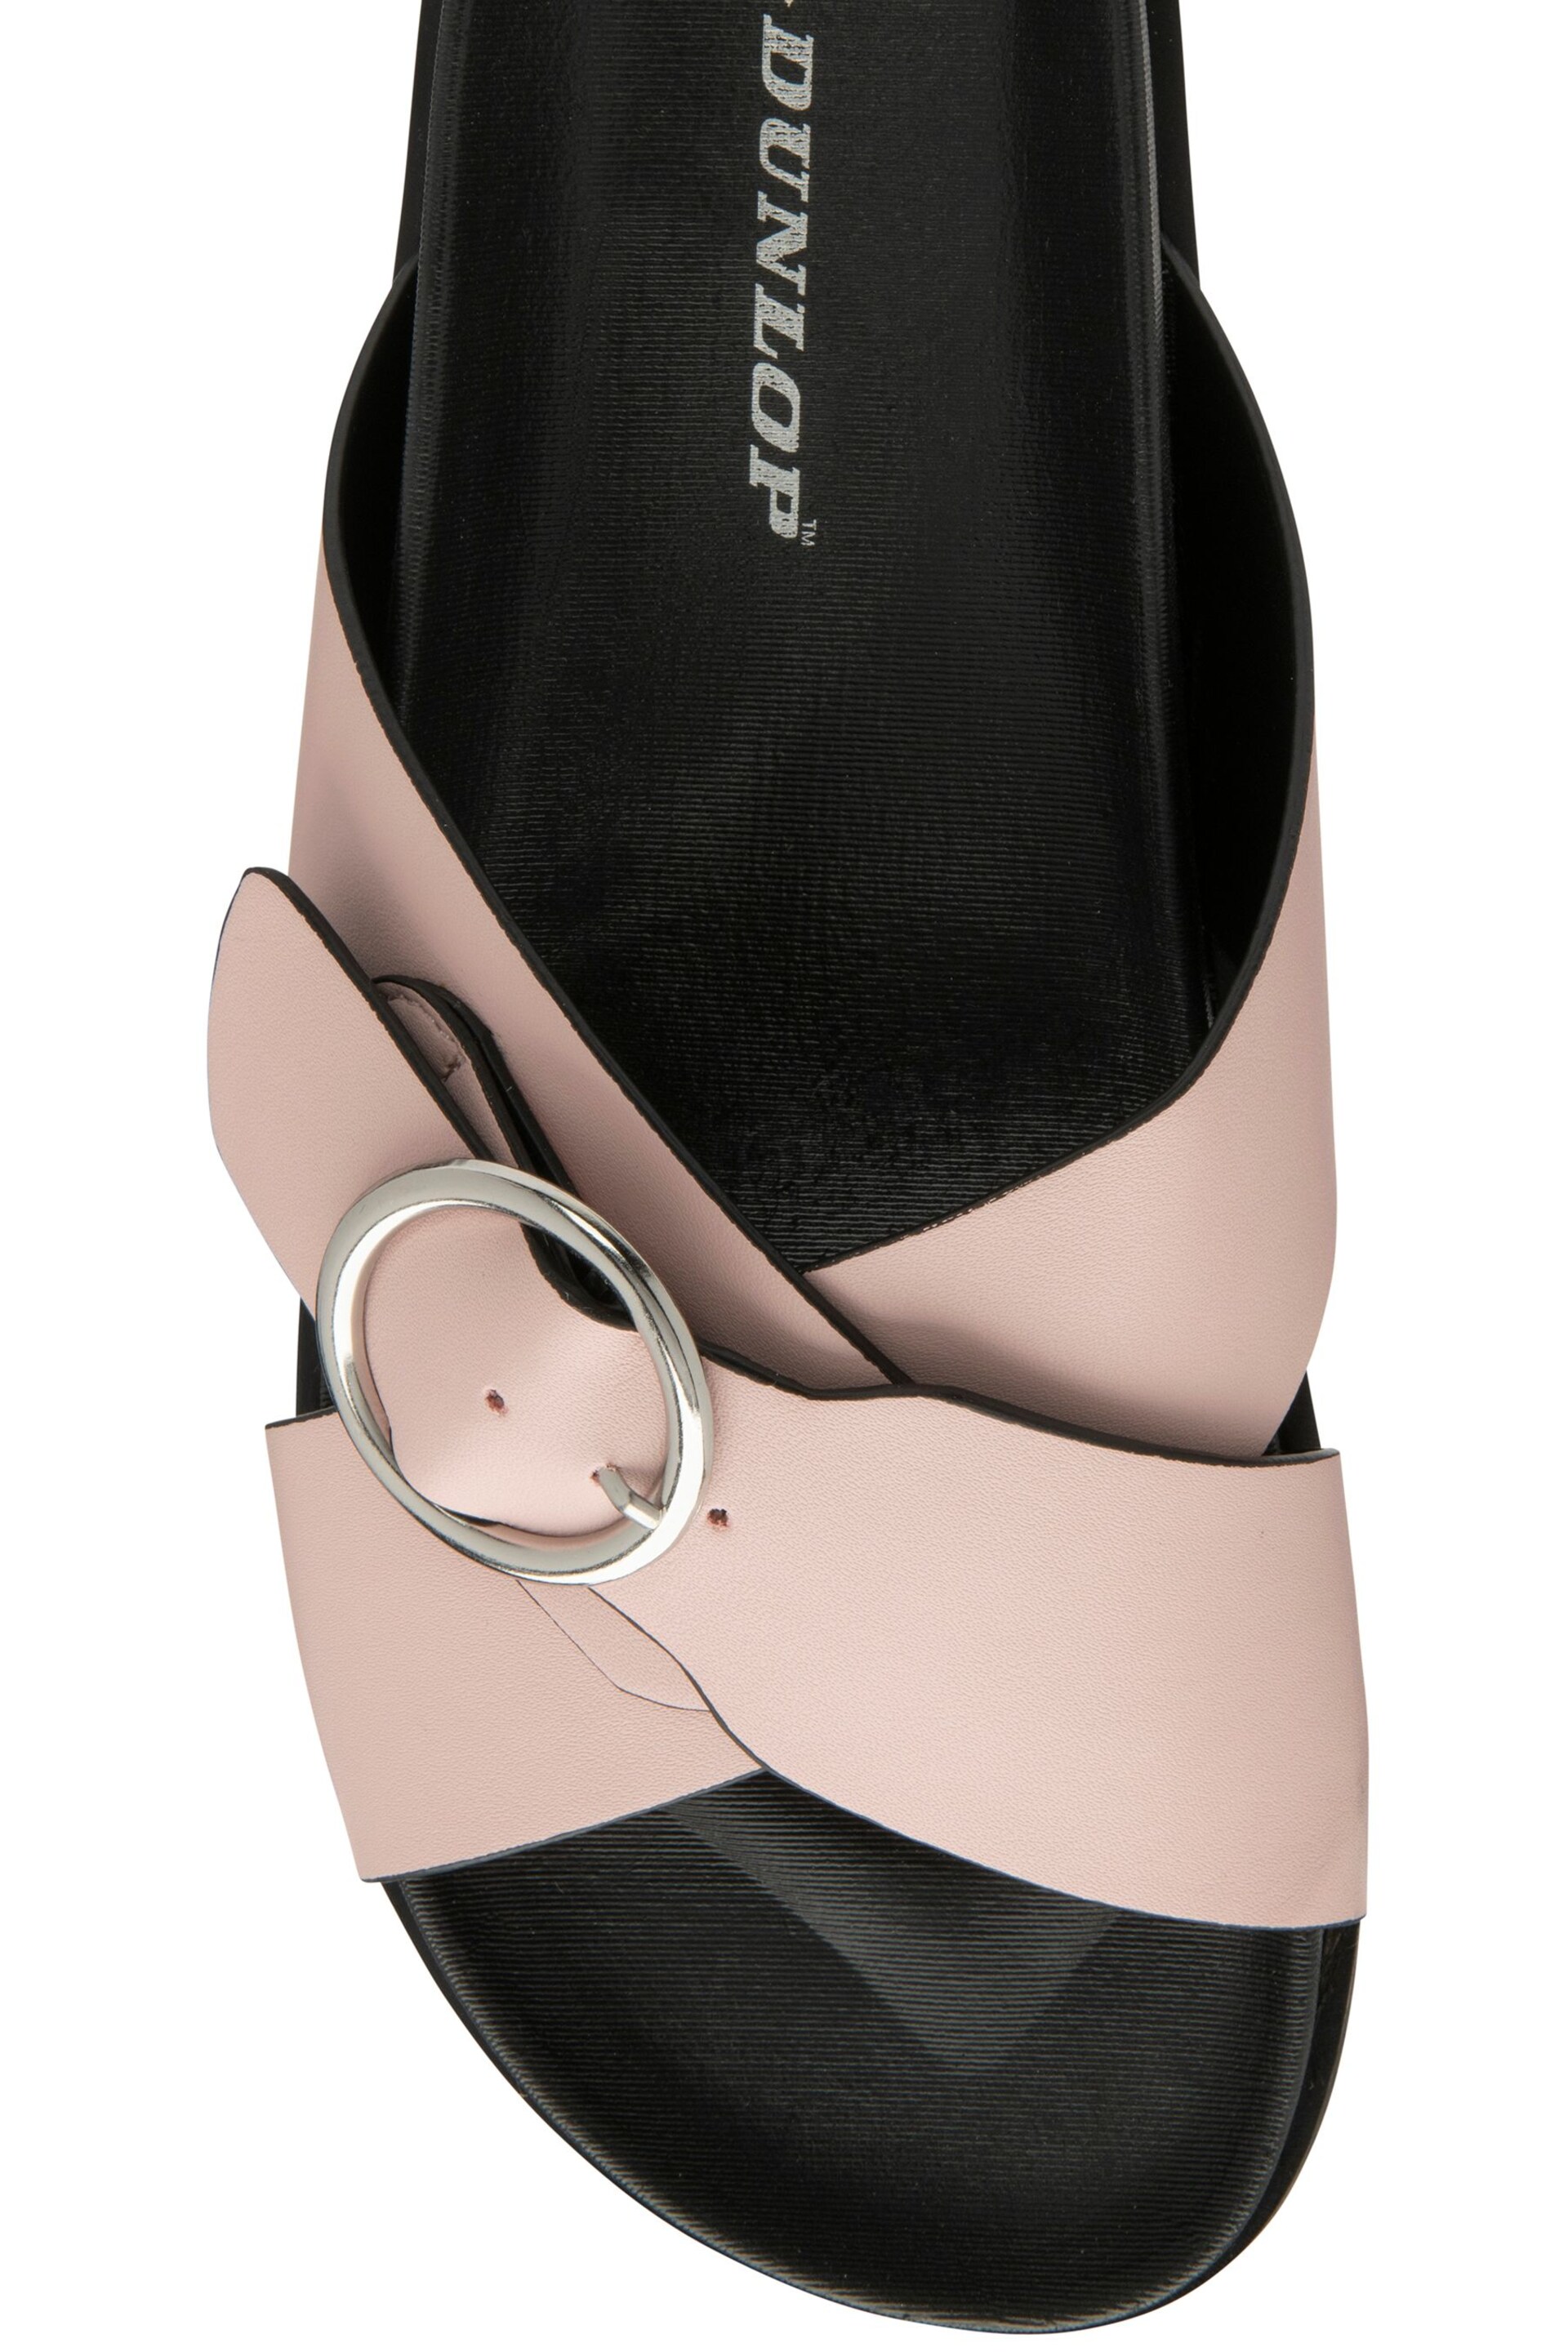 Dunlop Pink Open-Toe Mule Sandals - Image 4 of 4